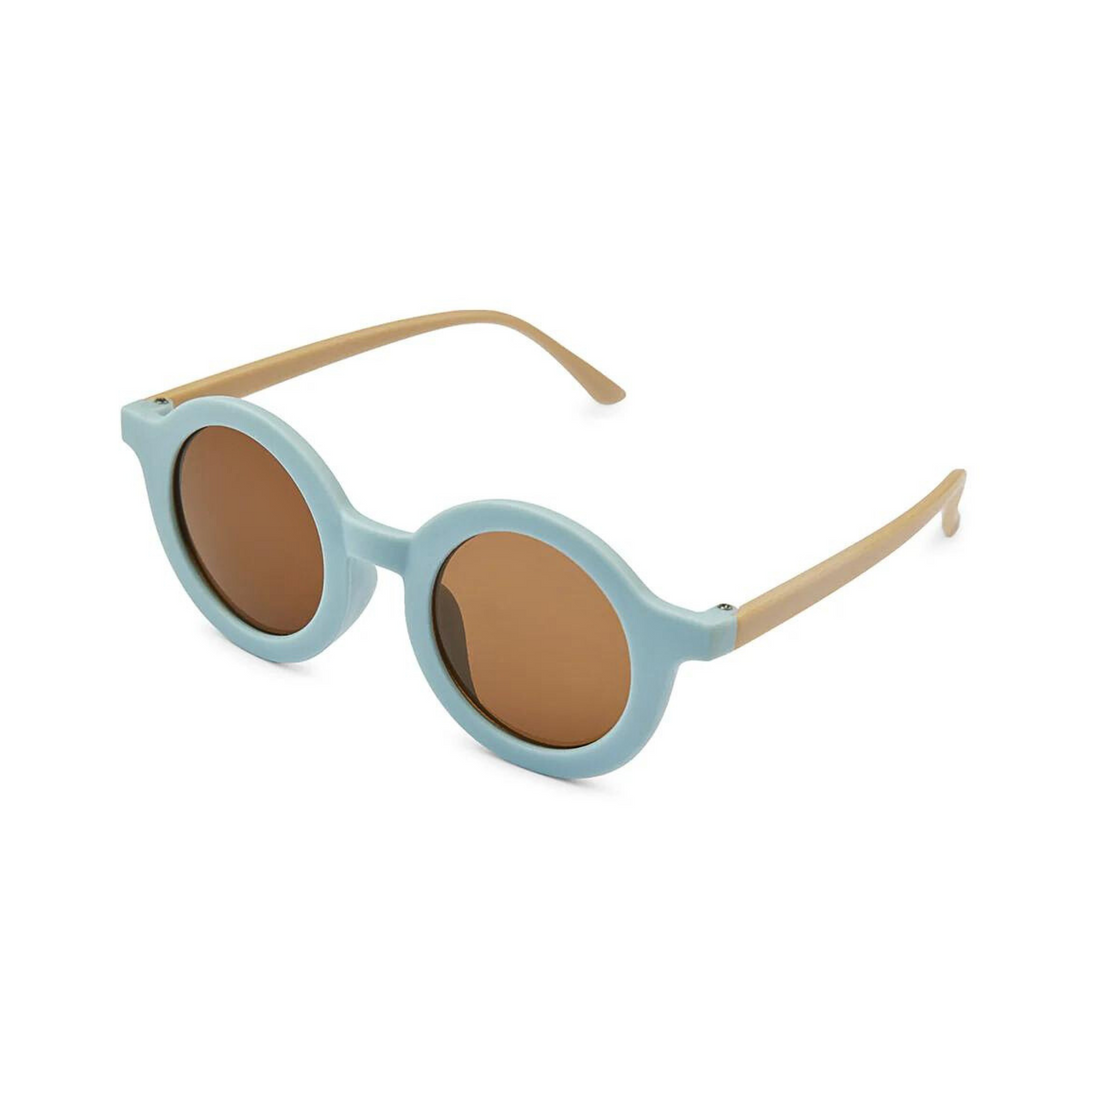 Sunglasses - Dusty blue 